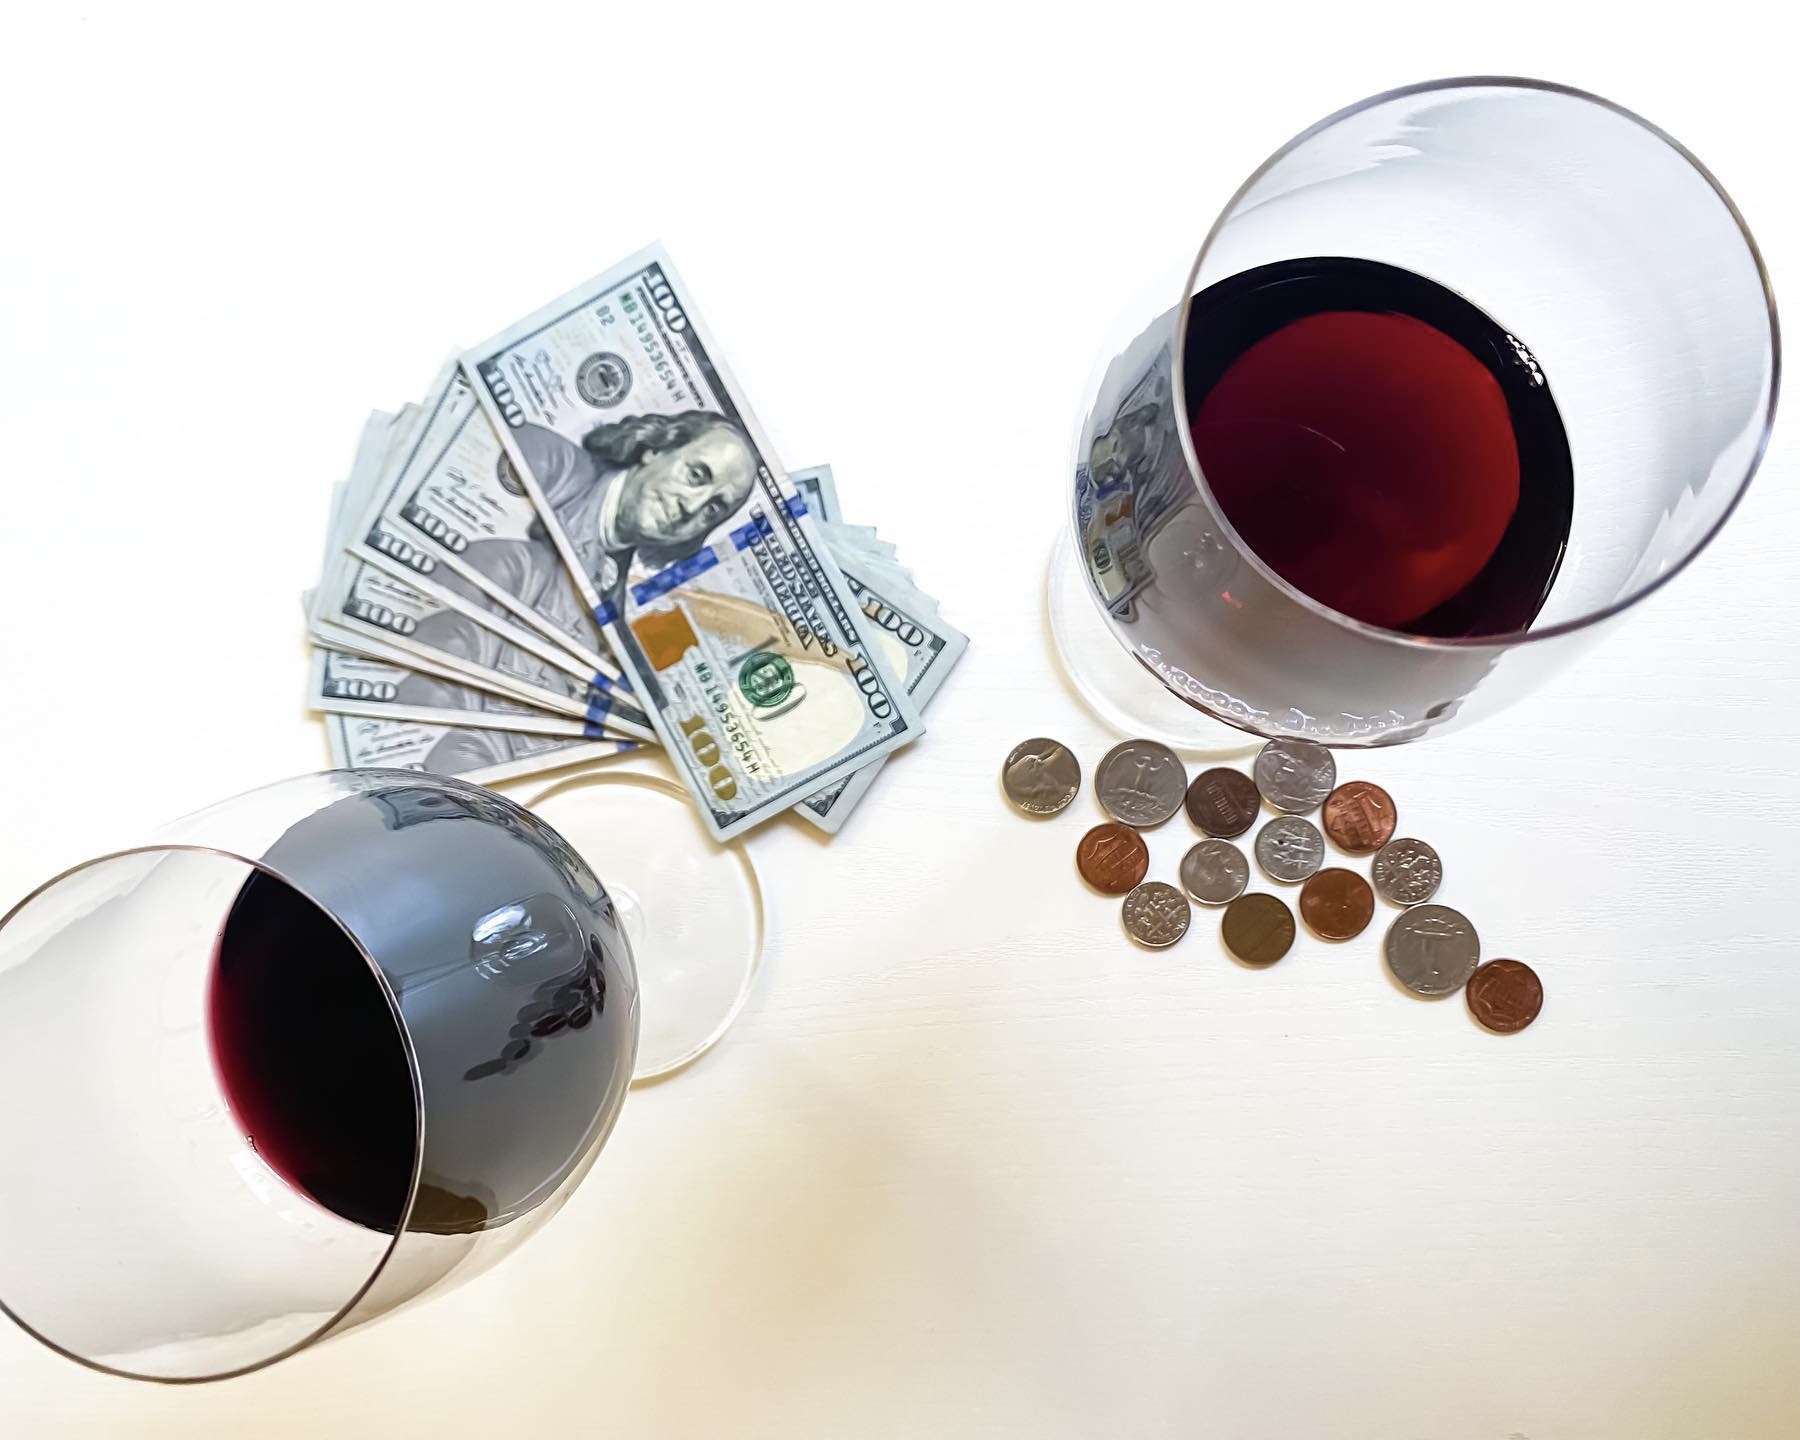 Cheap vs Expesive wines